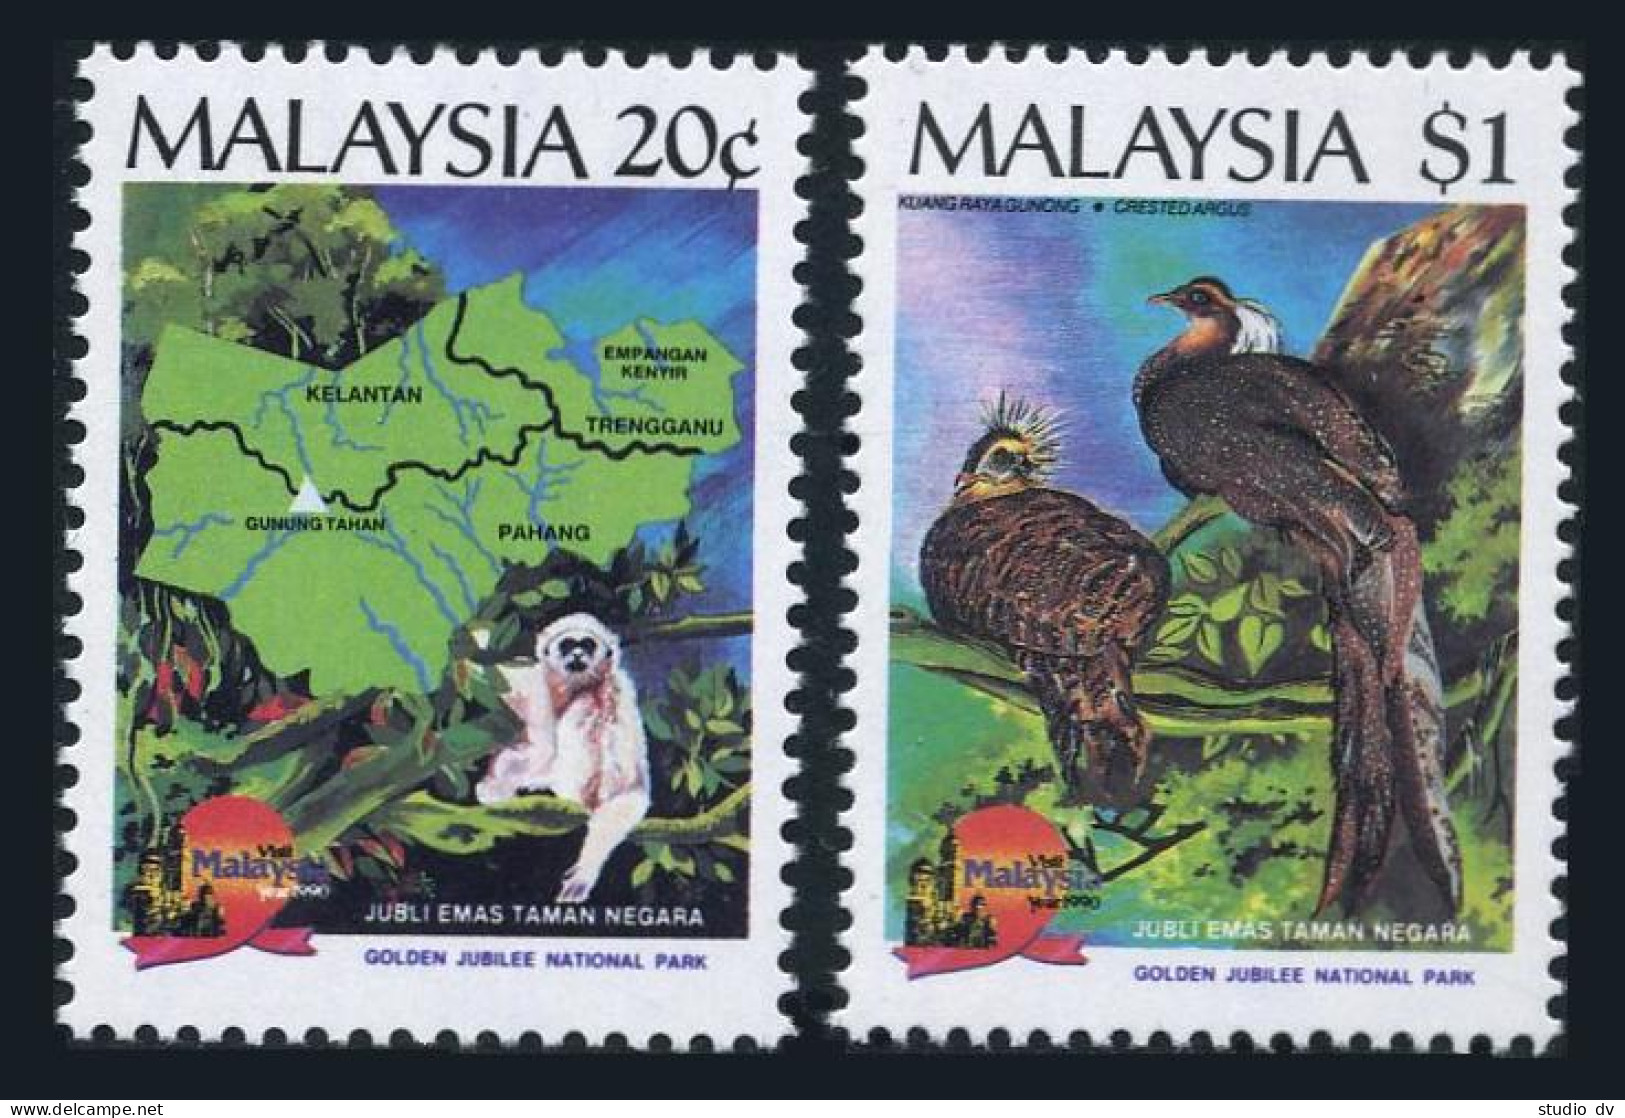 Malaysia 411-412,MNH.Michel 416-417. National Park-50.Sloth,Bird,Map.1989.  - Malaysia (1964-...)